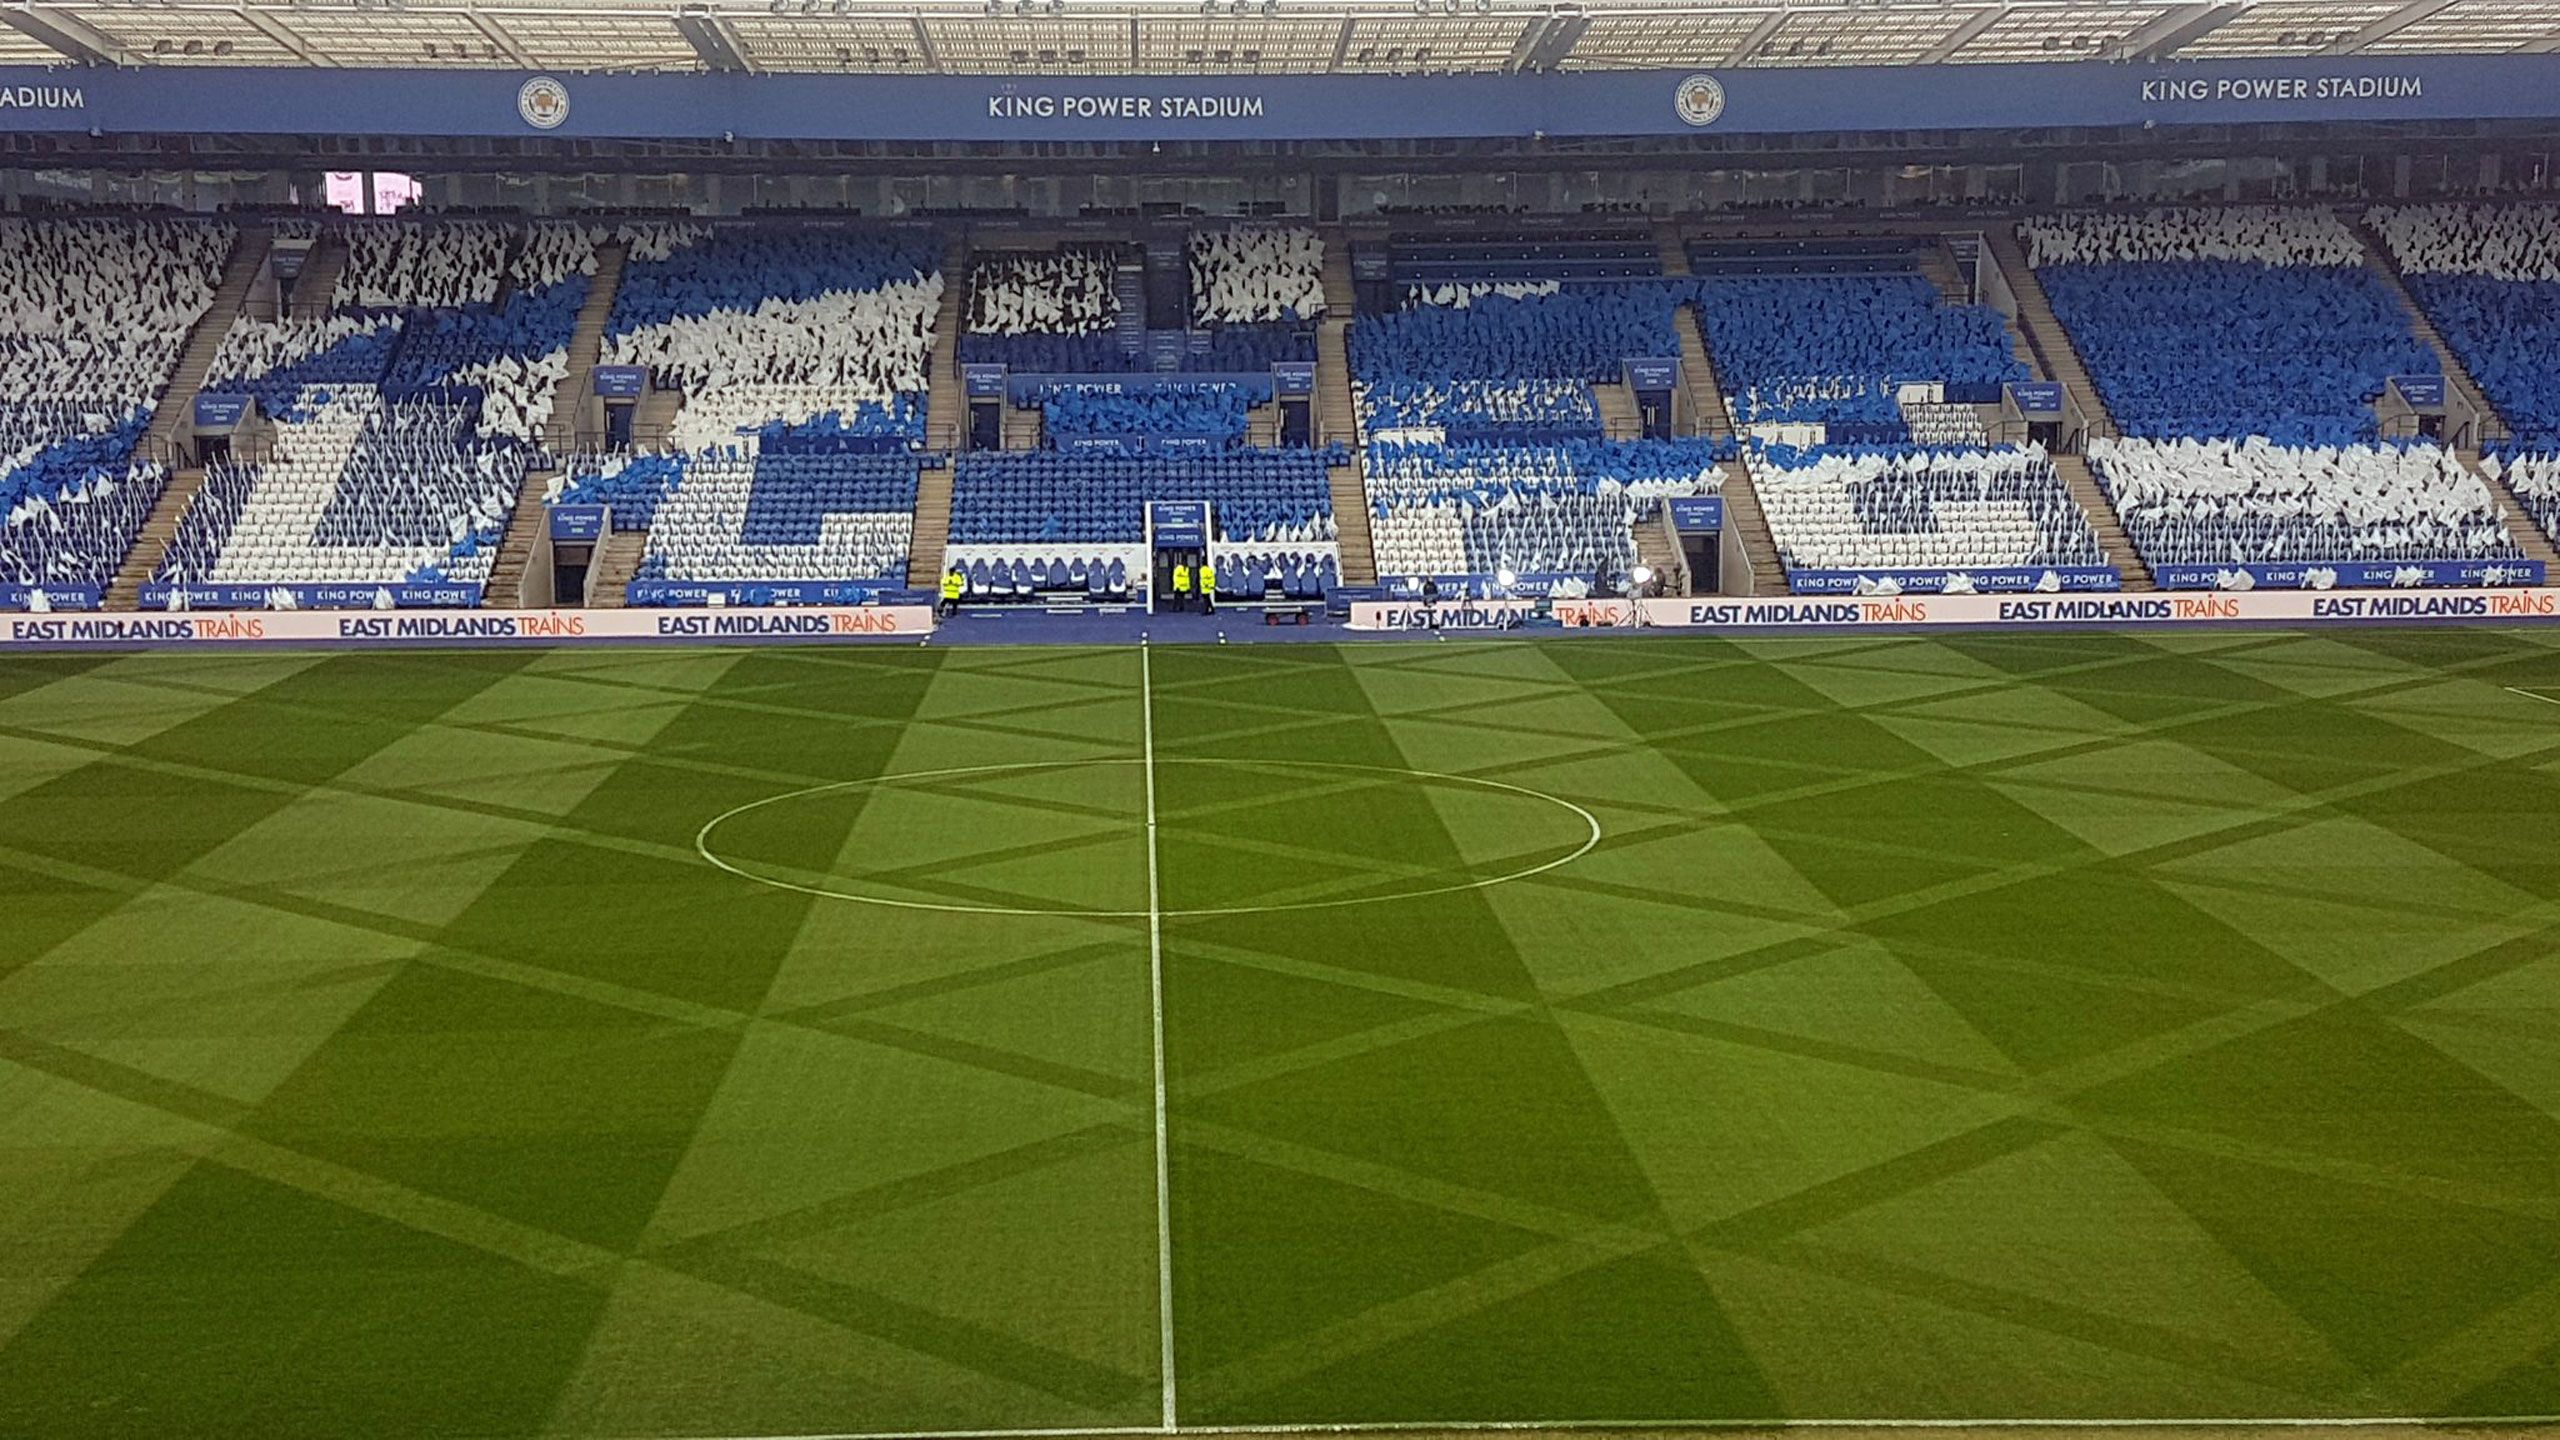 Leicester City FC's King Power stadium mowed by John Ledwidge